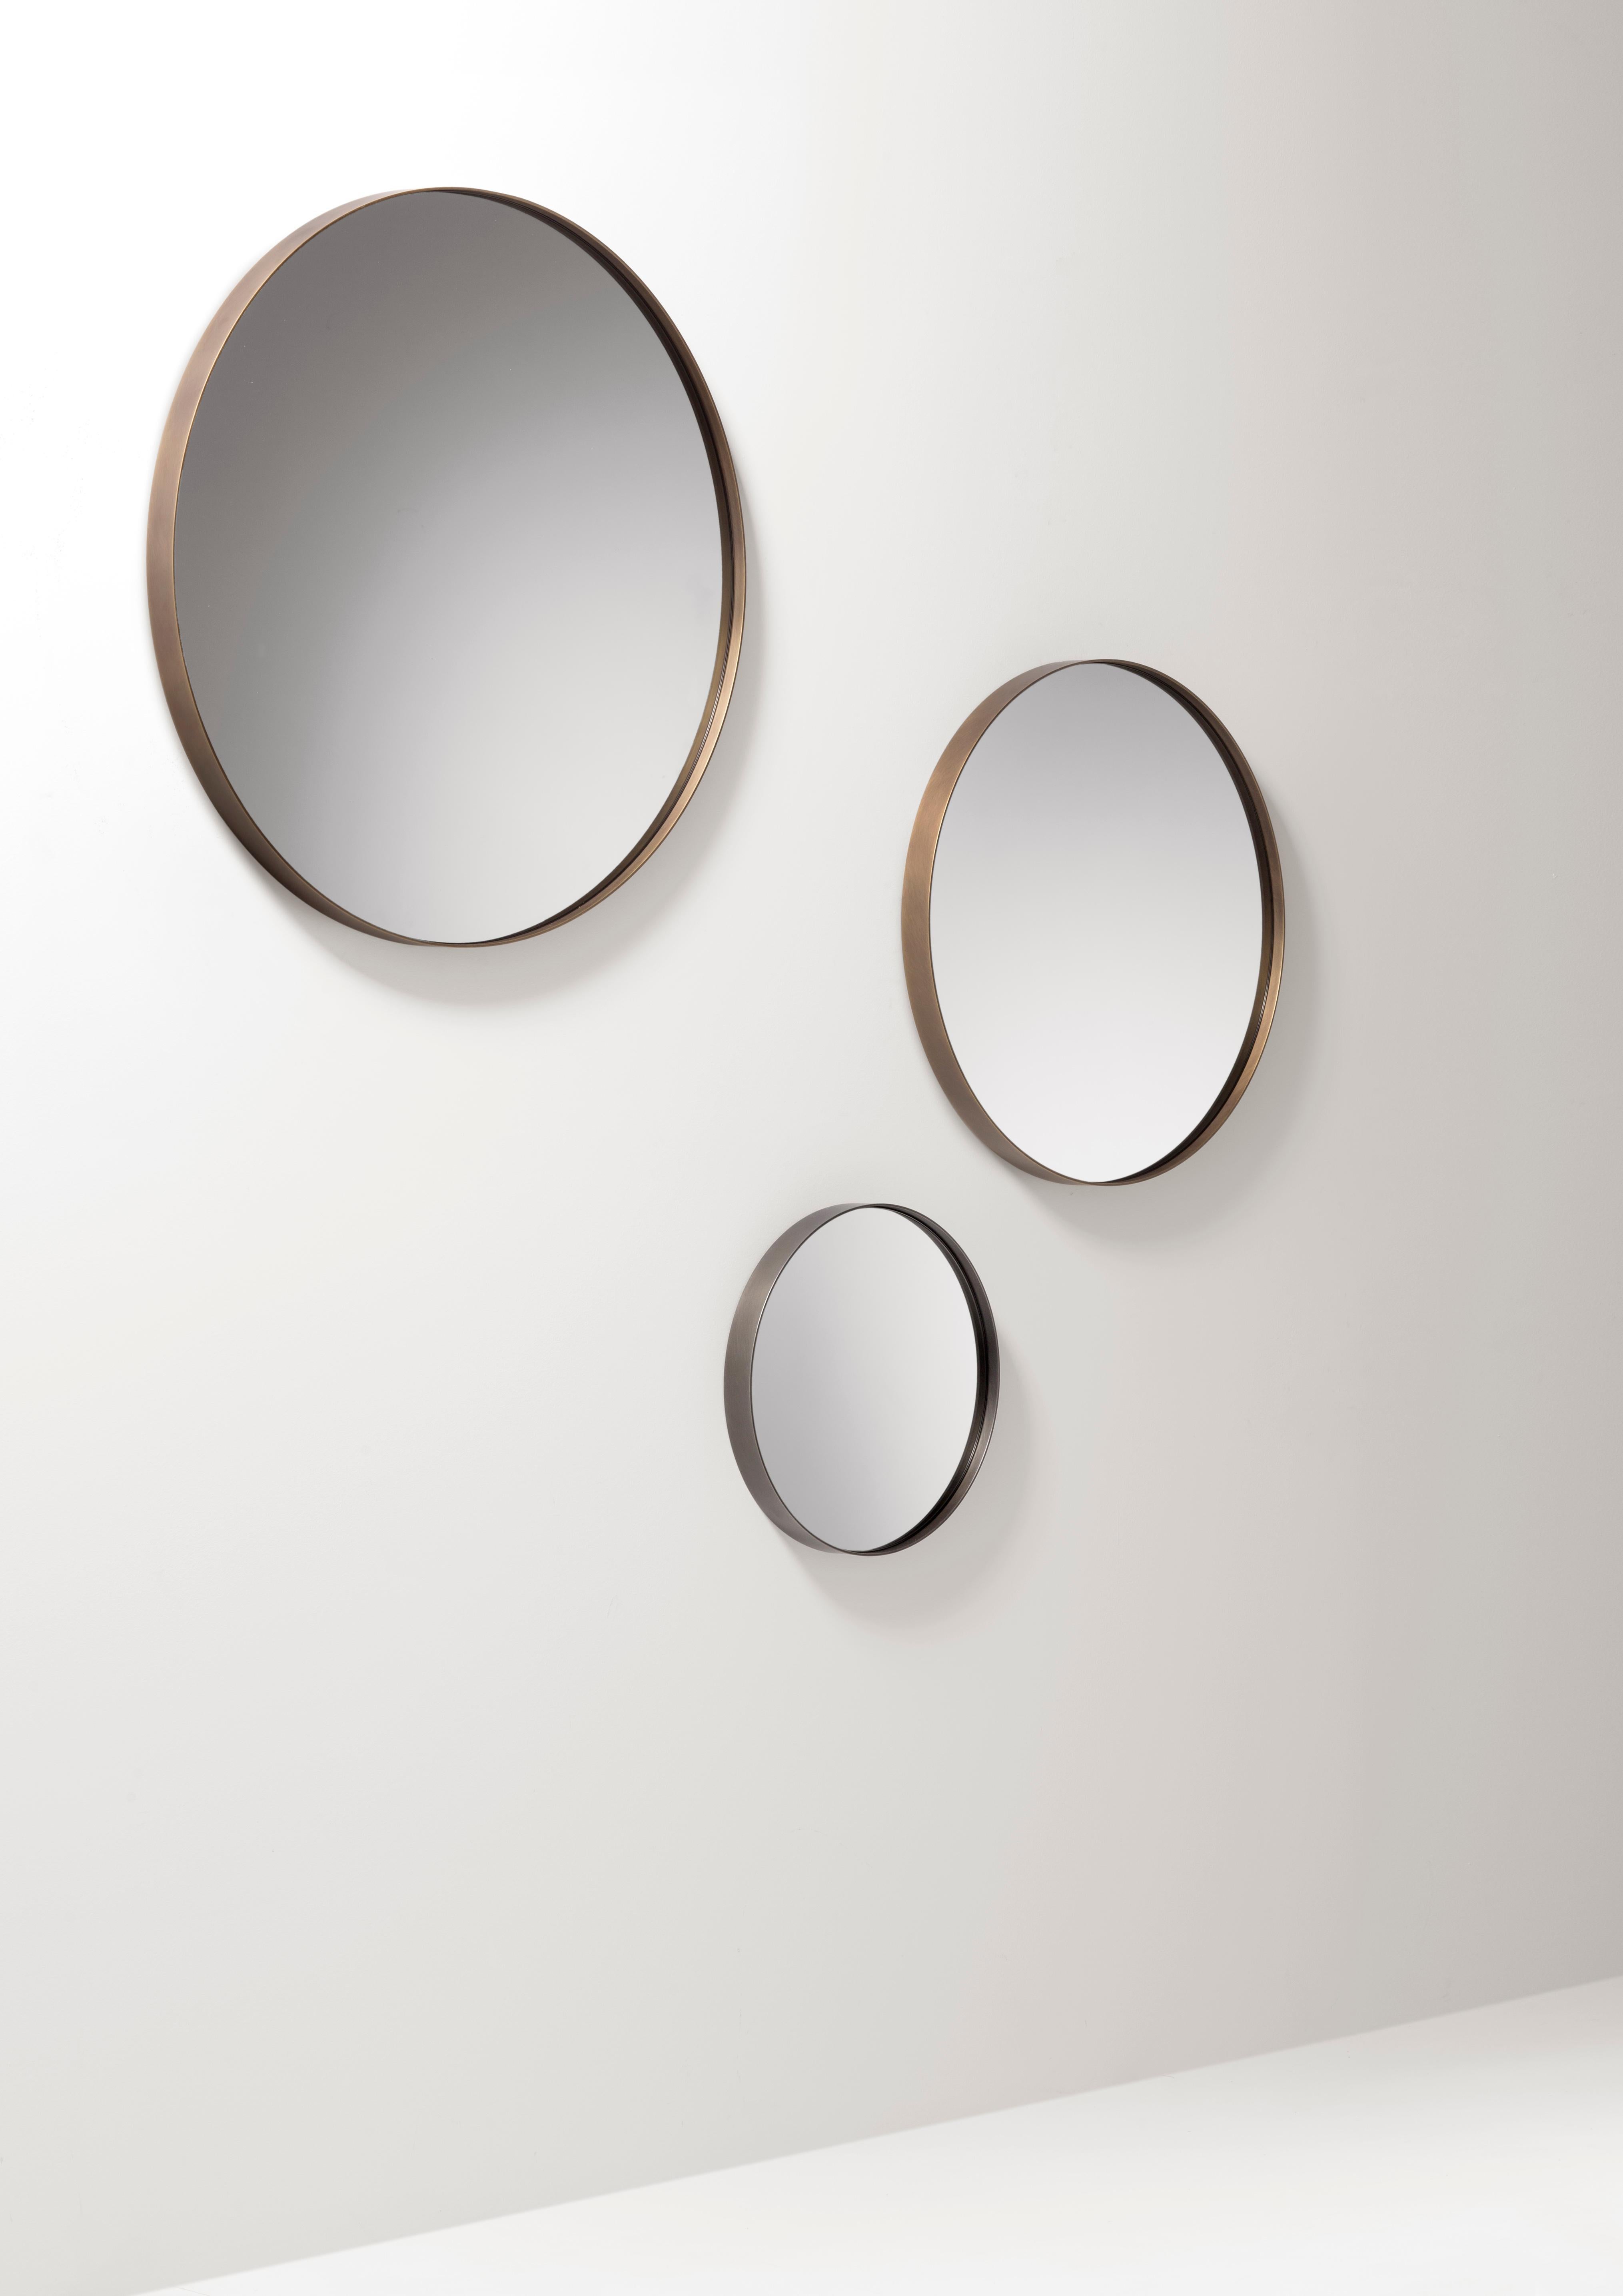 Modern DeCastelli Riflesso 70 Mirror with Brass Frame by R&D De Castelli For Sale